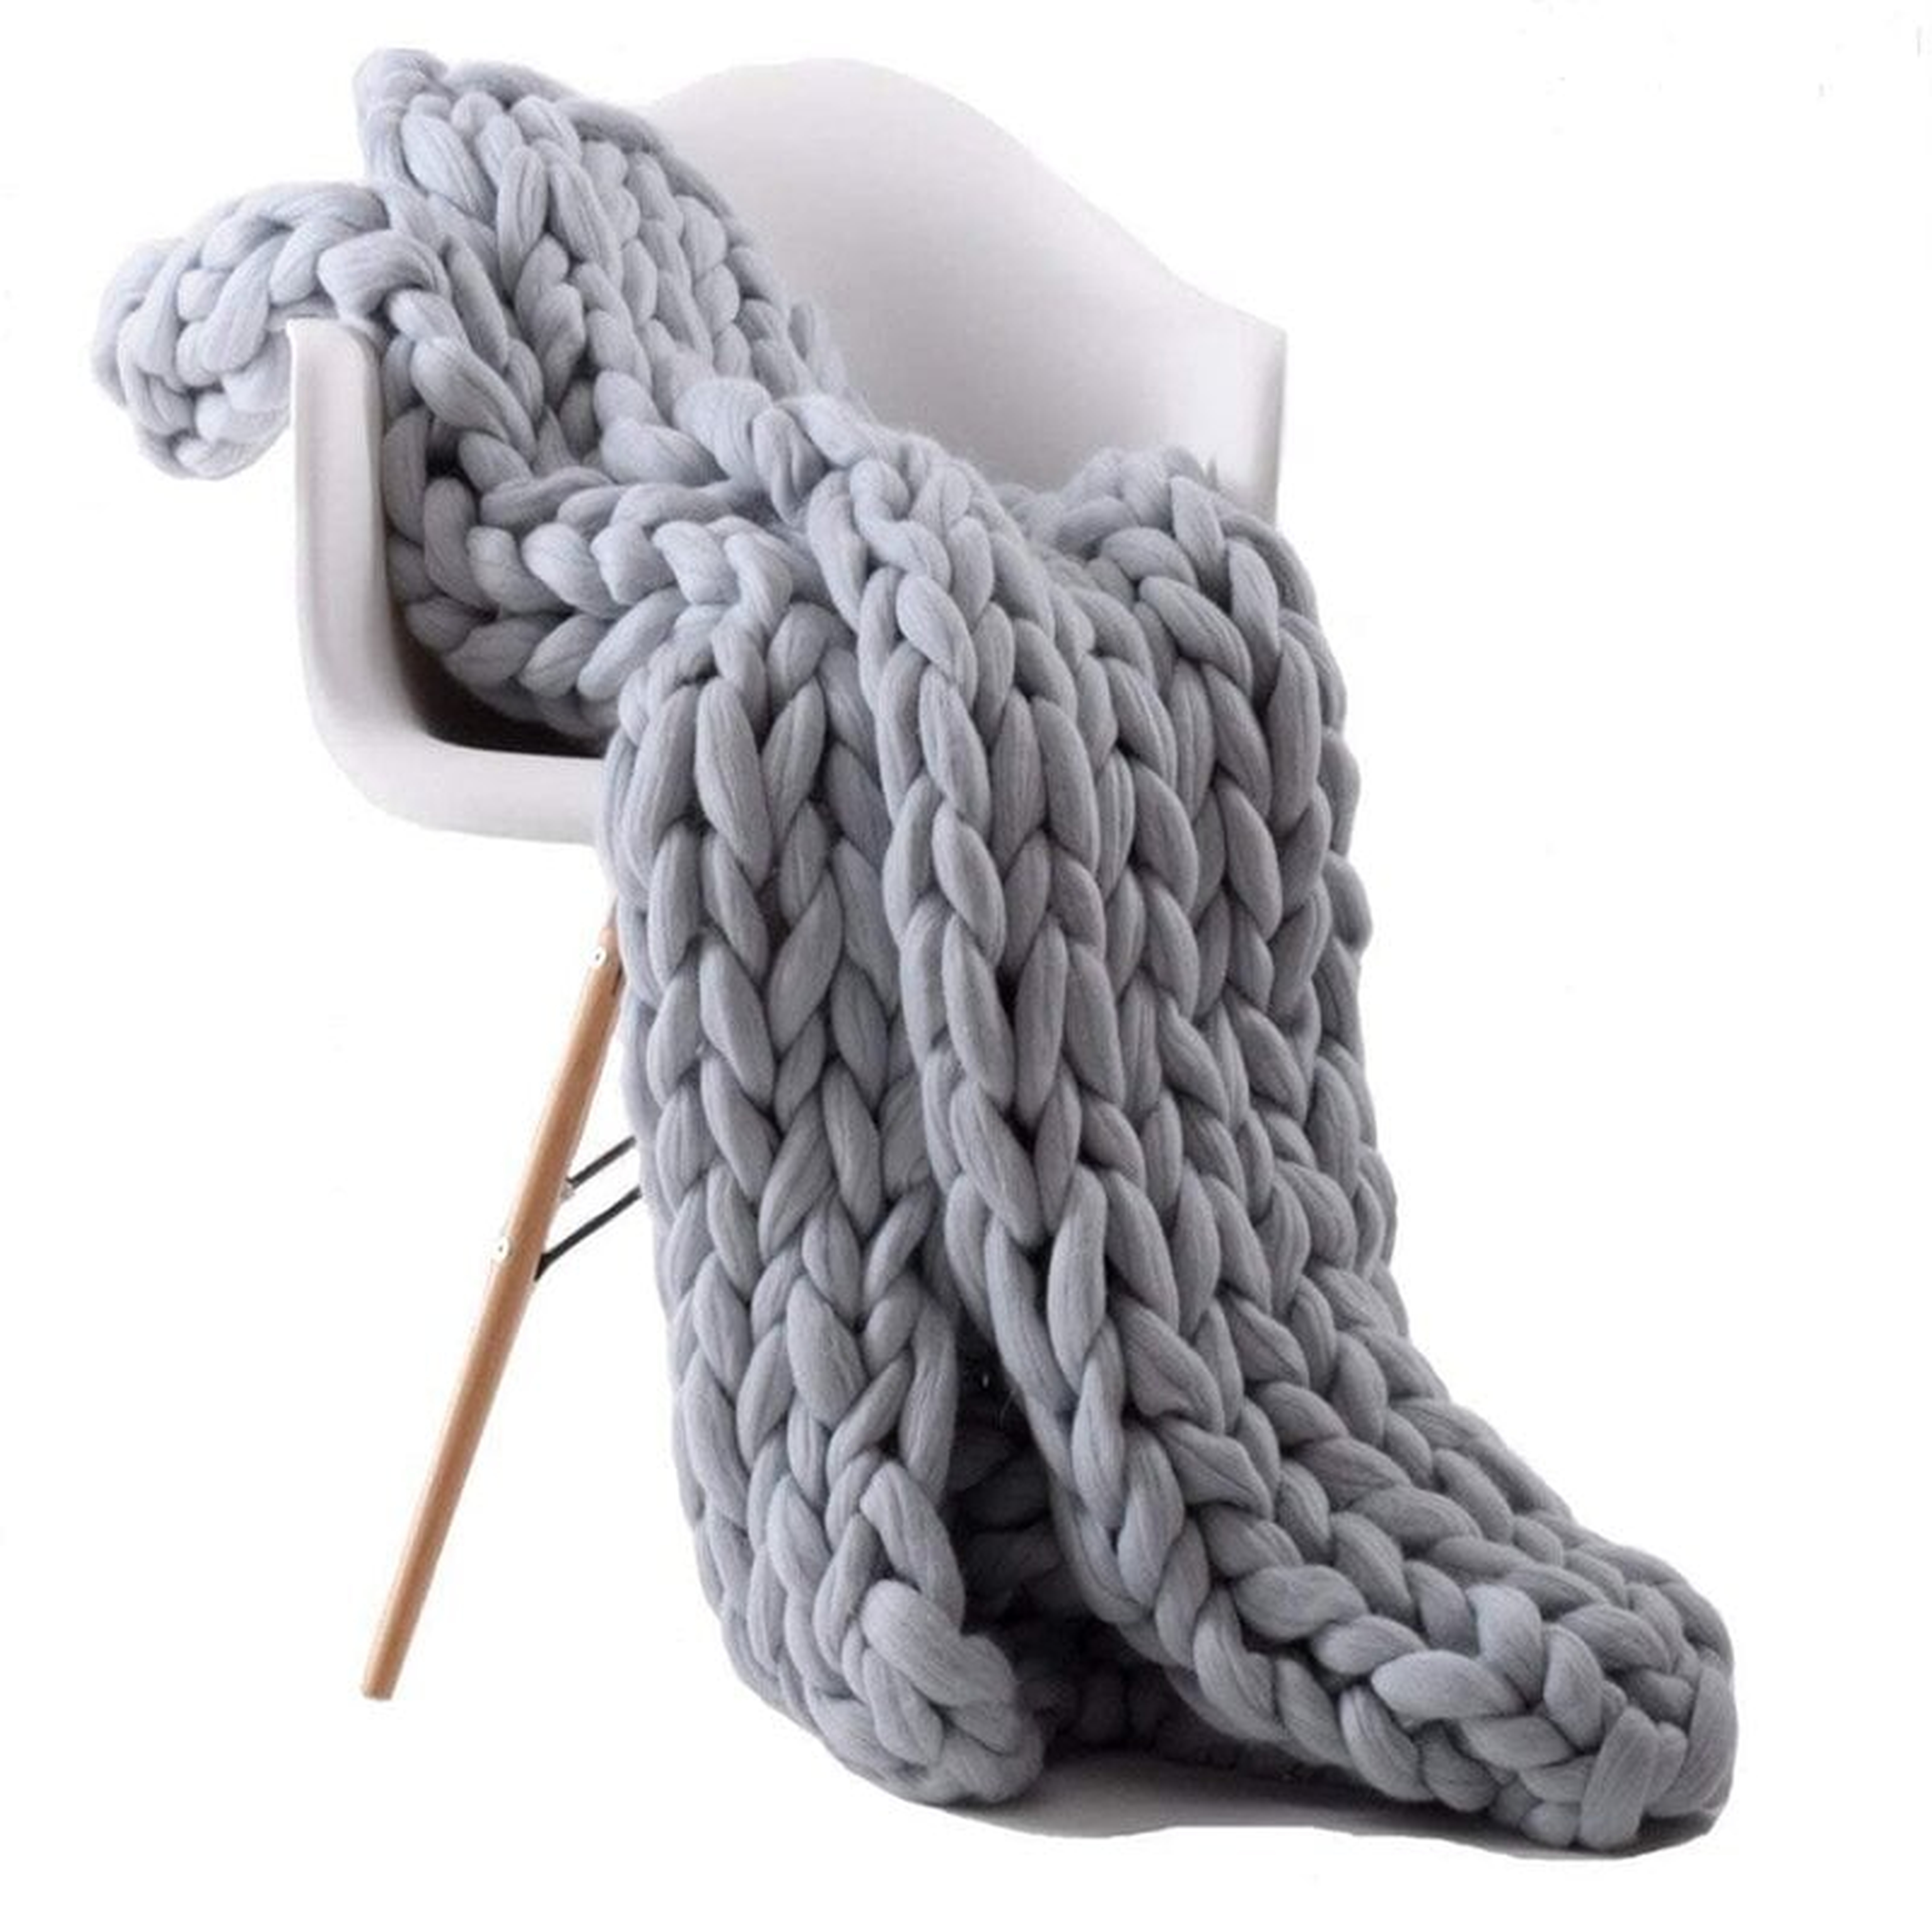 mayhill chunky knitted blanket - Wayfair